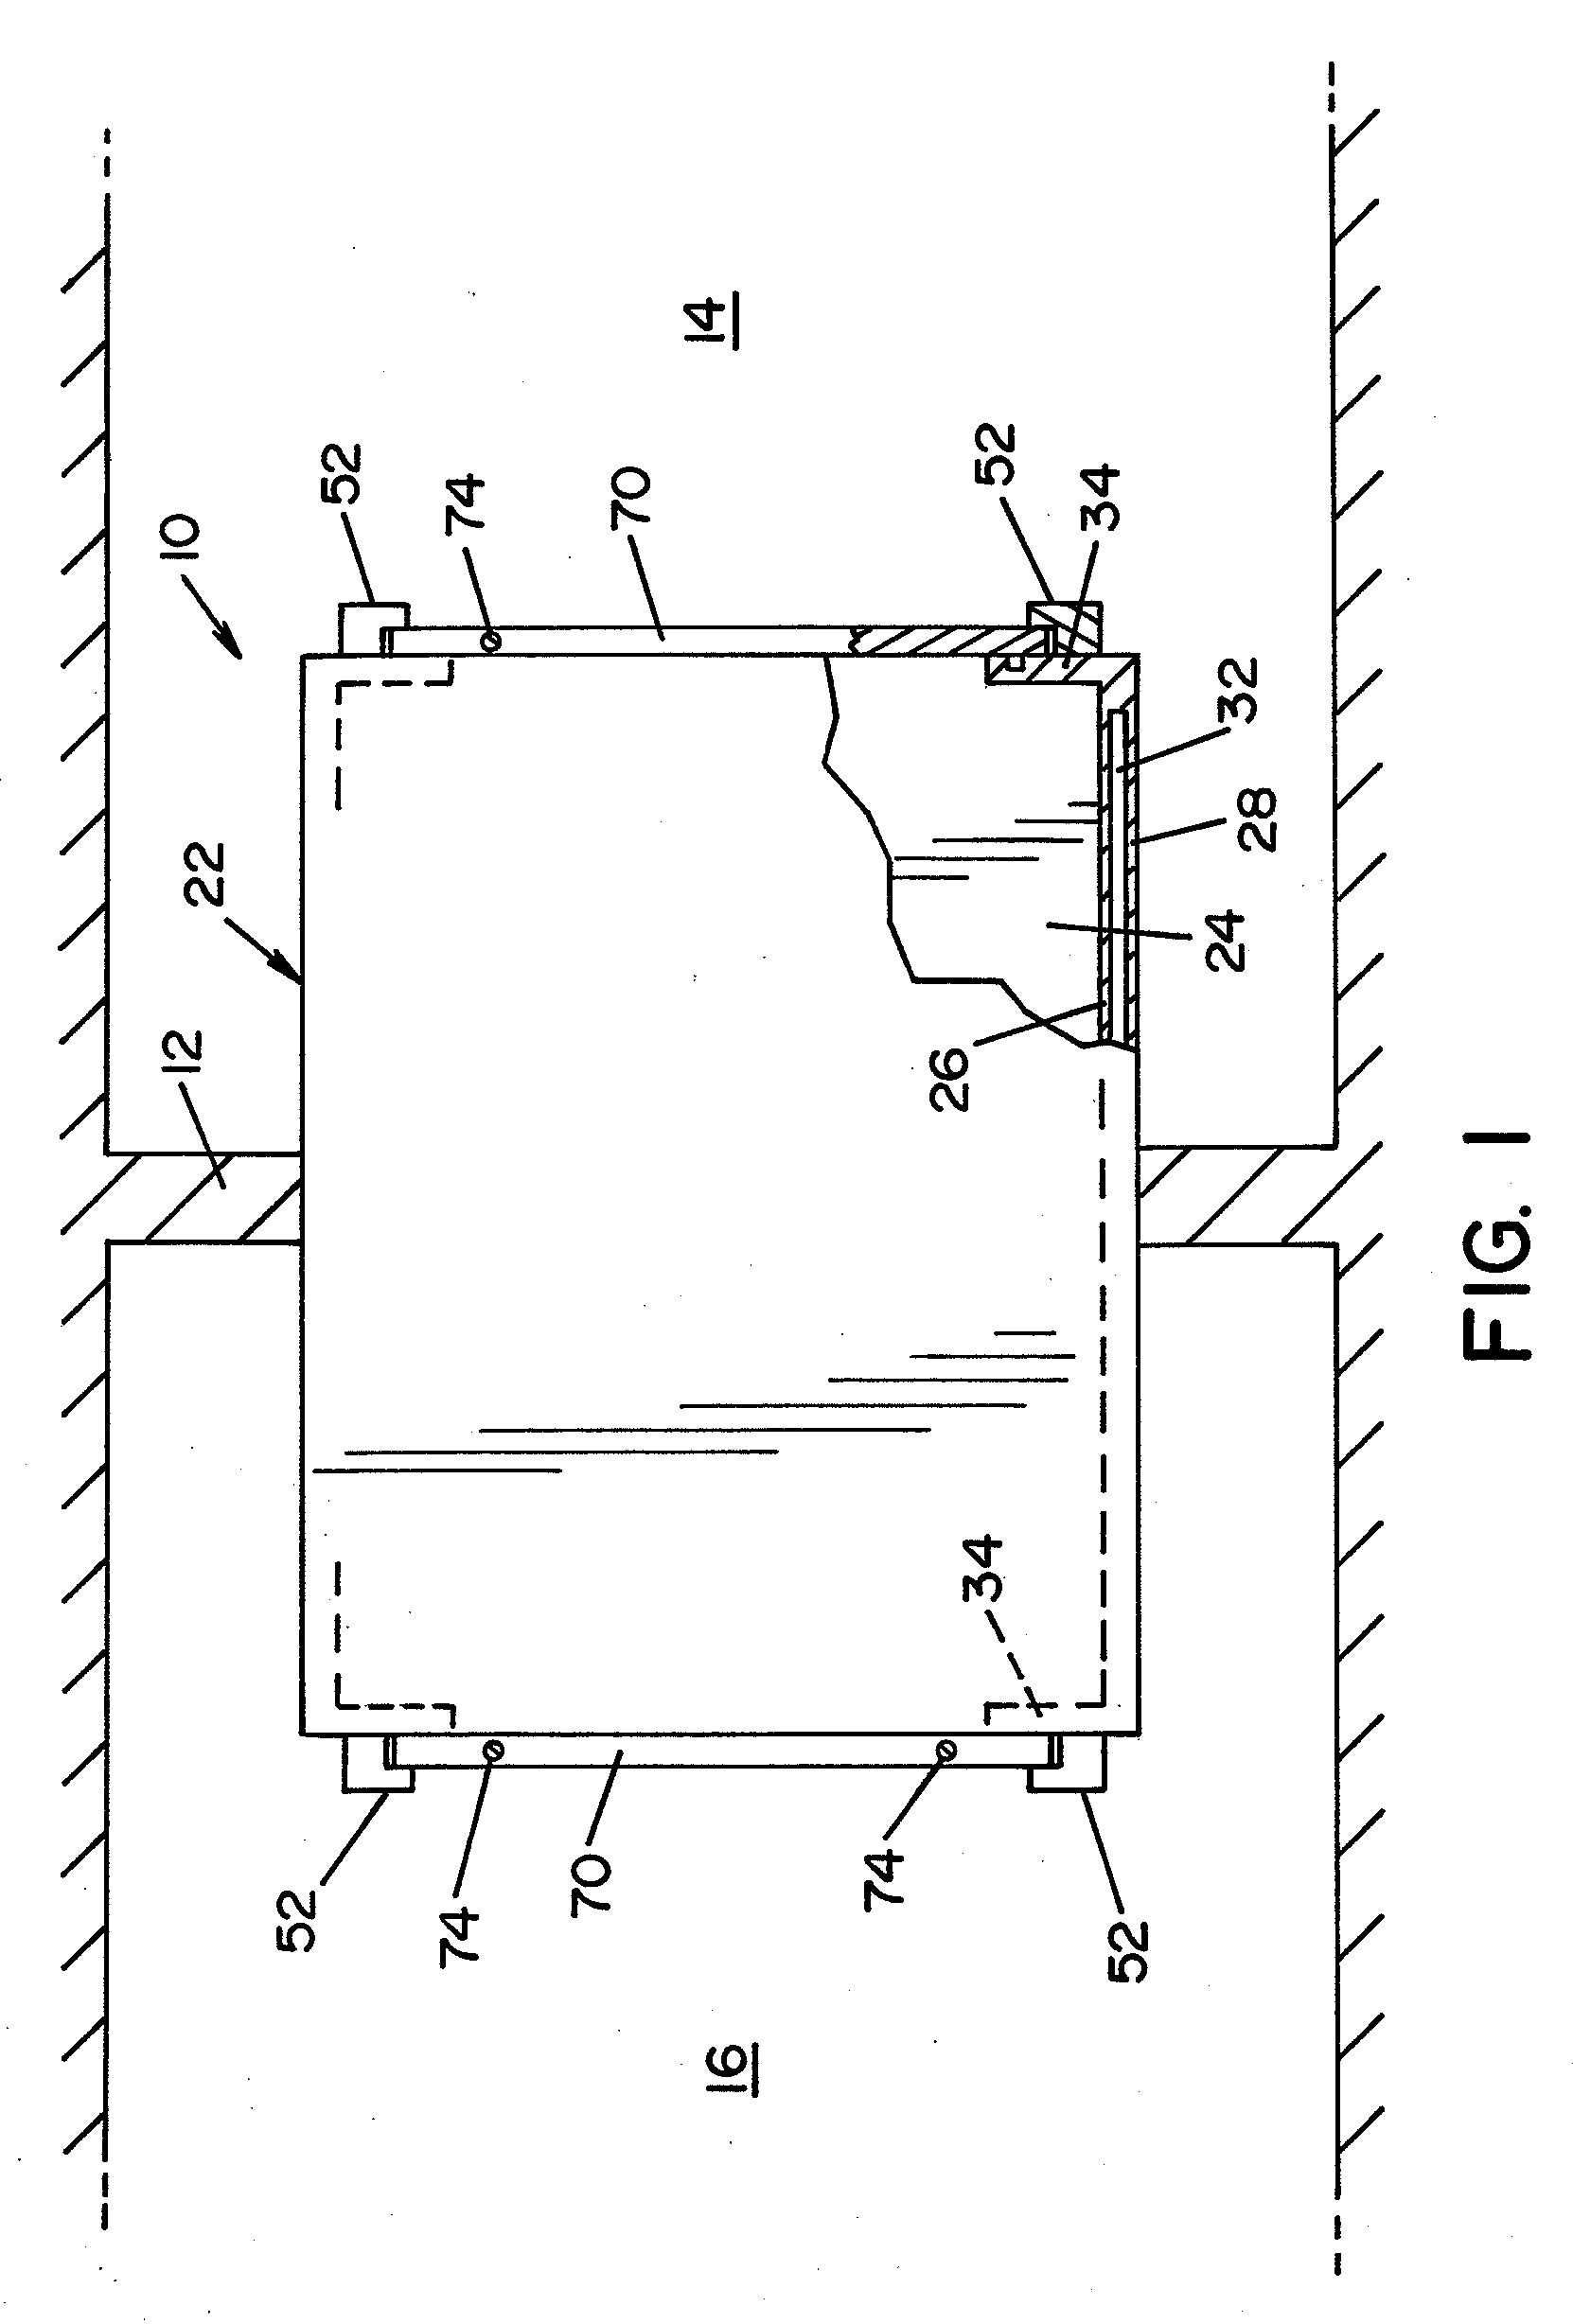 Door seal system for steam sterilizer